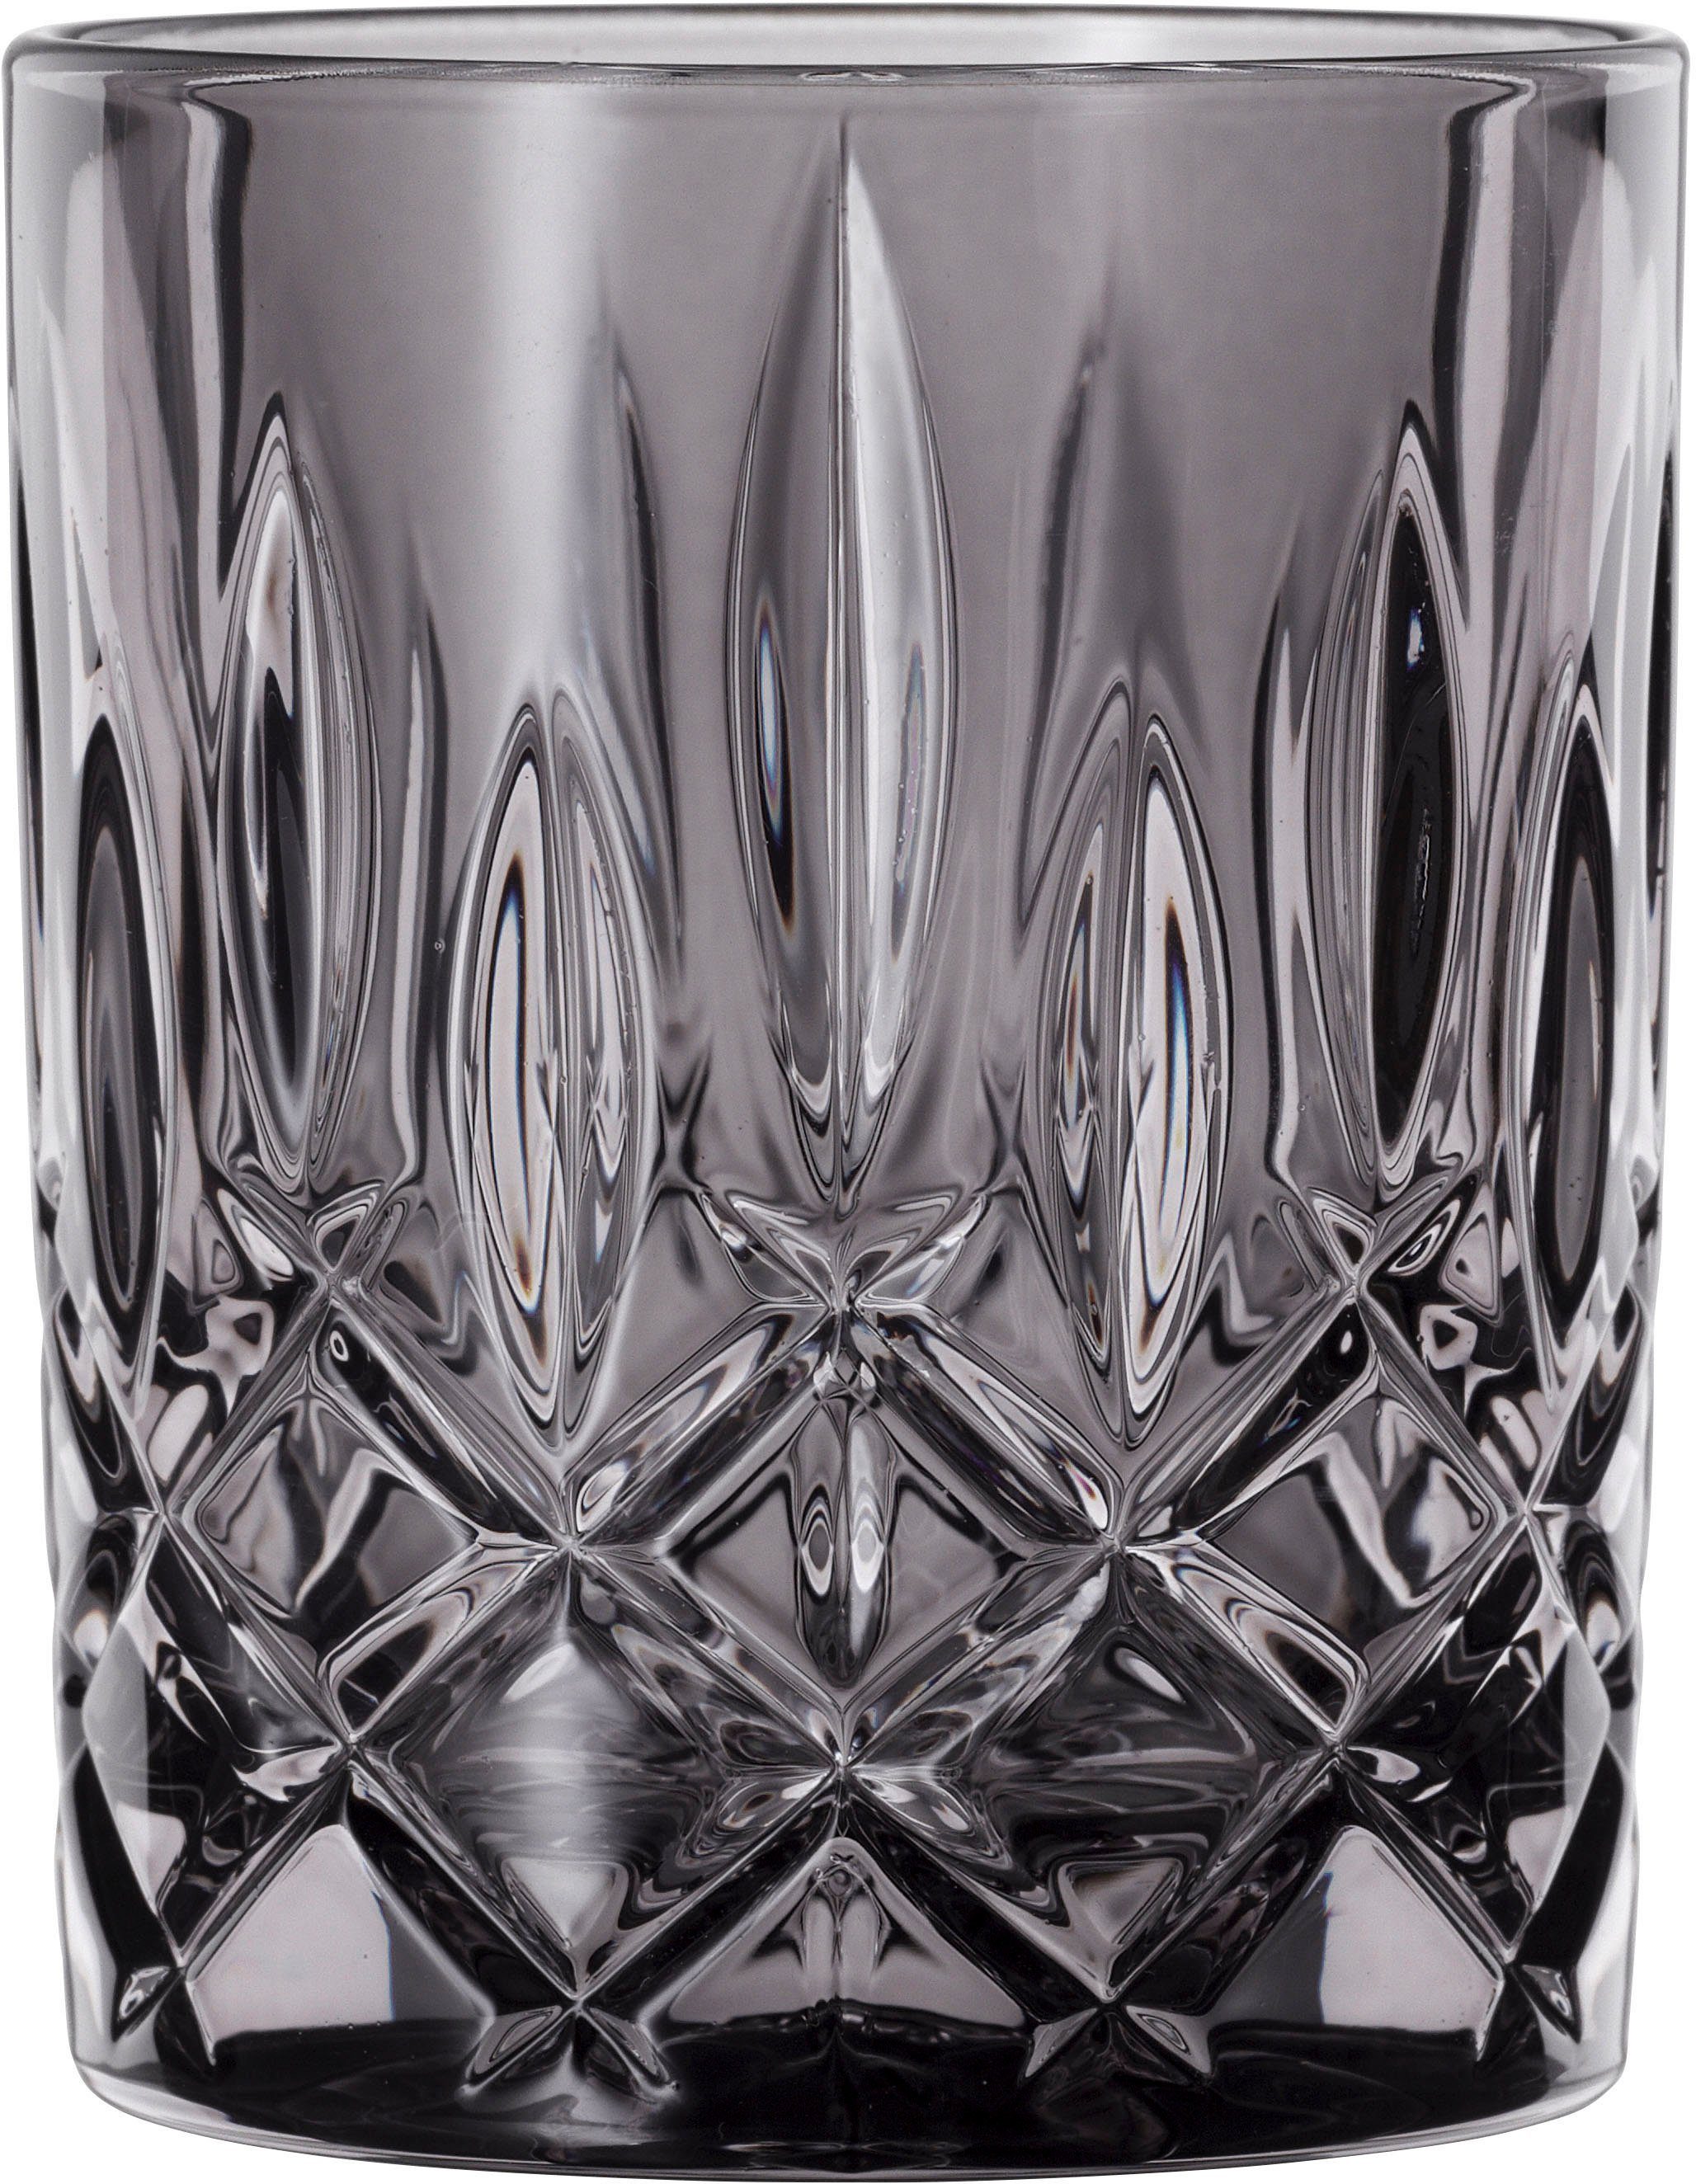 Nachtmann Whiskyglas Noblesse, Kristallglas, in smoke ml, Germany, 2-teilig Made 295